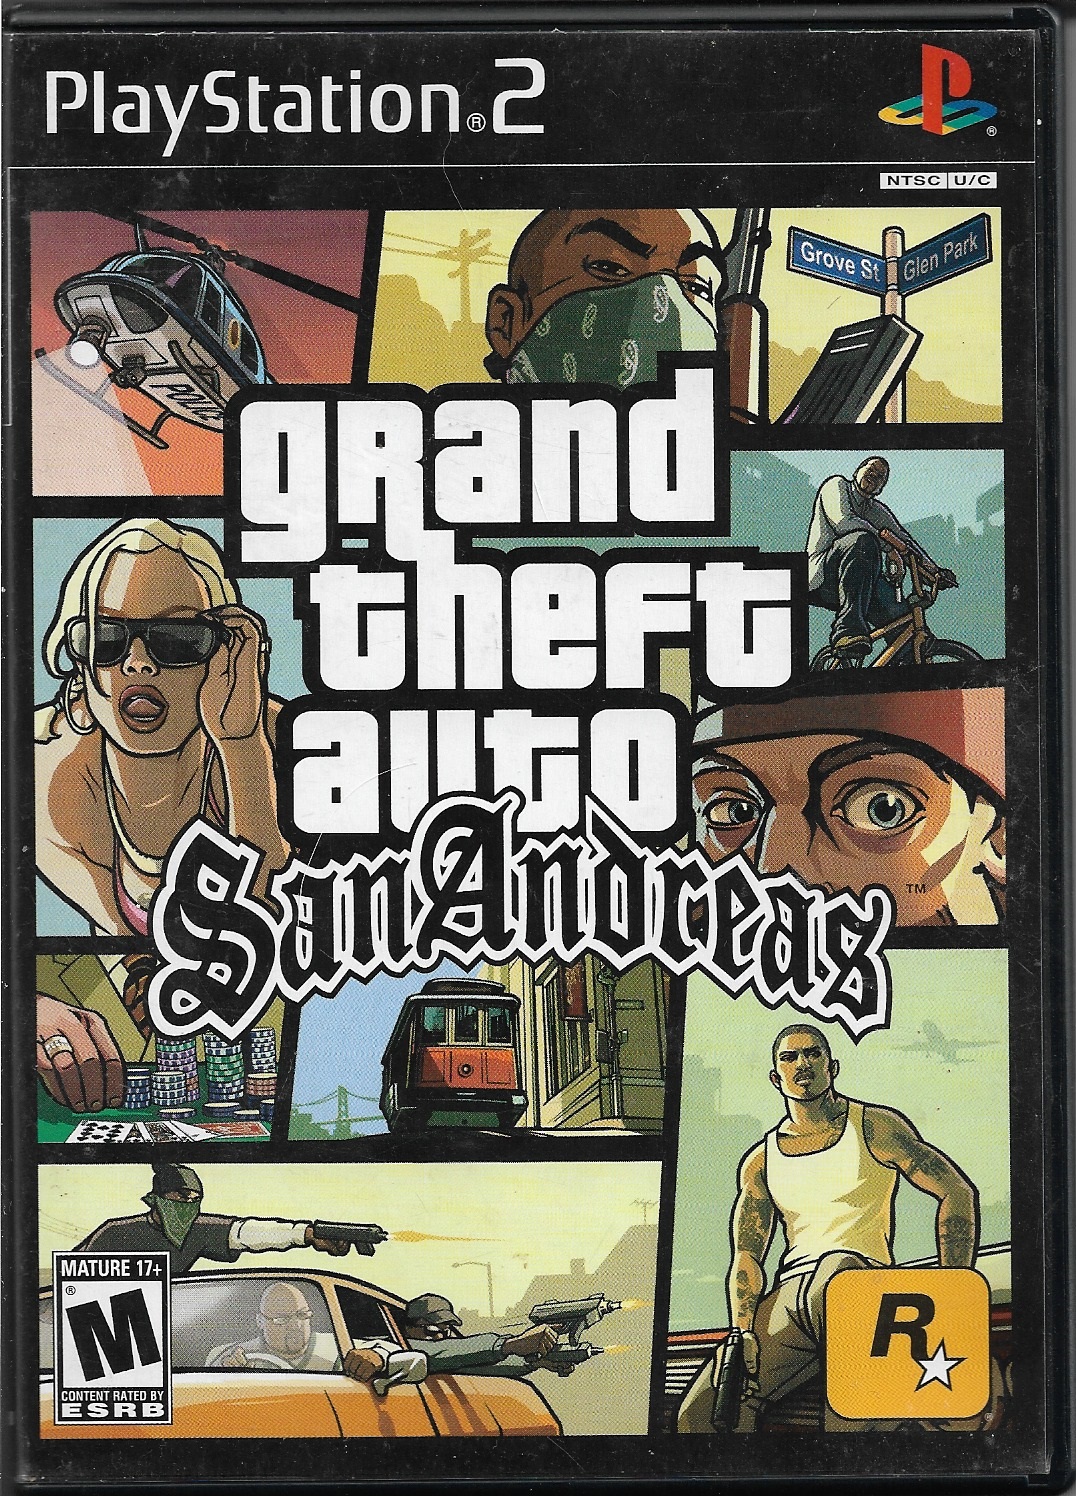 Baixar Grand Theft Auto: San Andreas Grátis